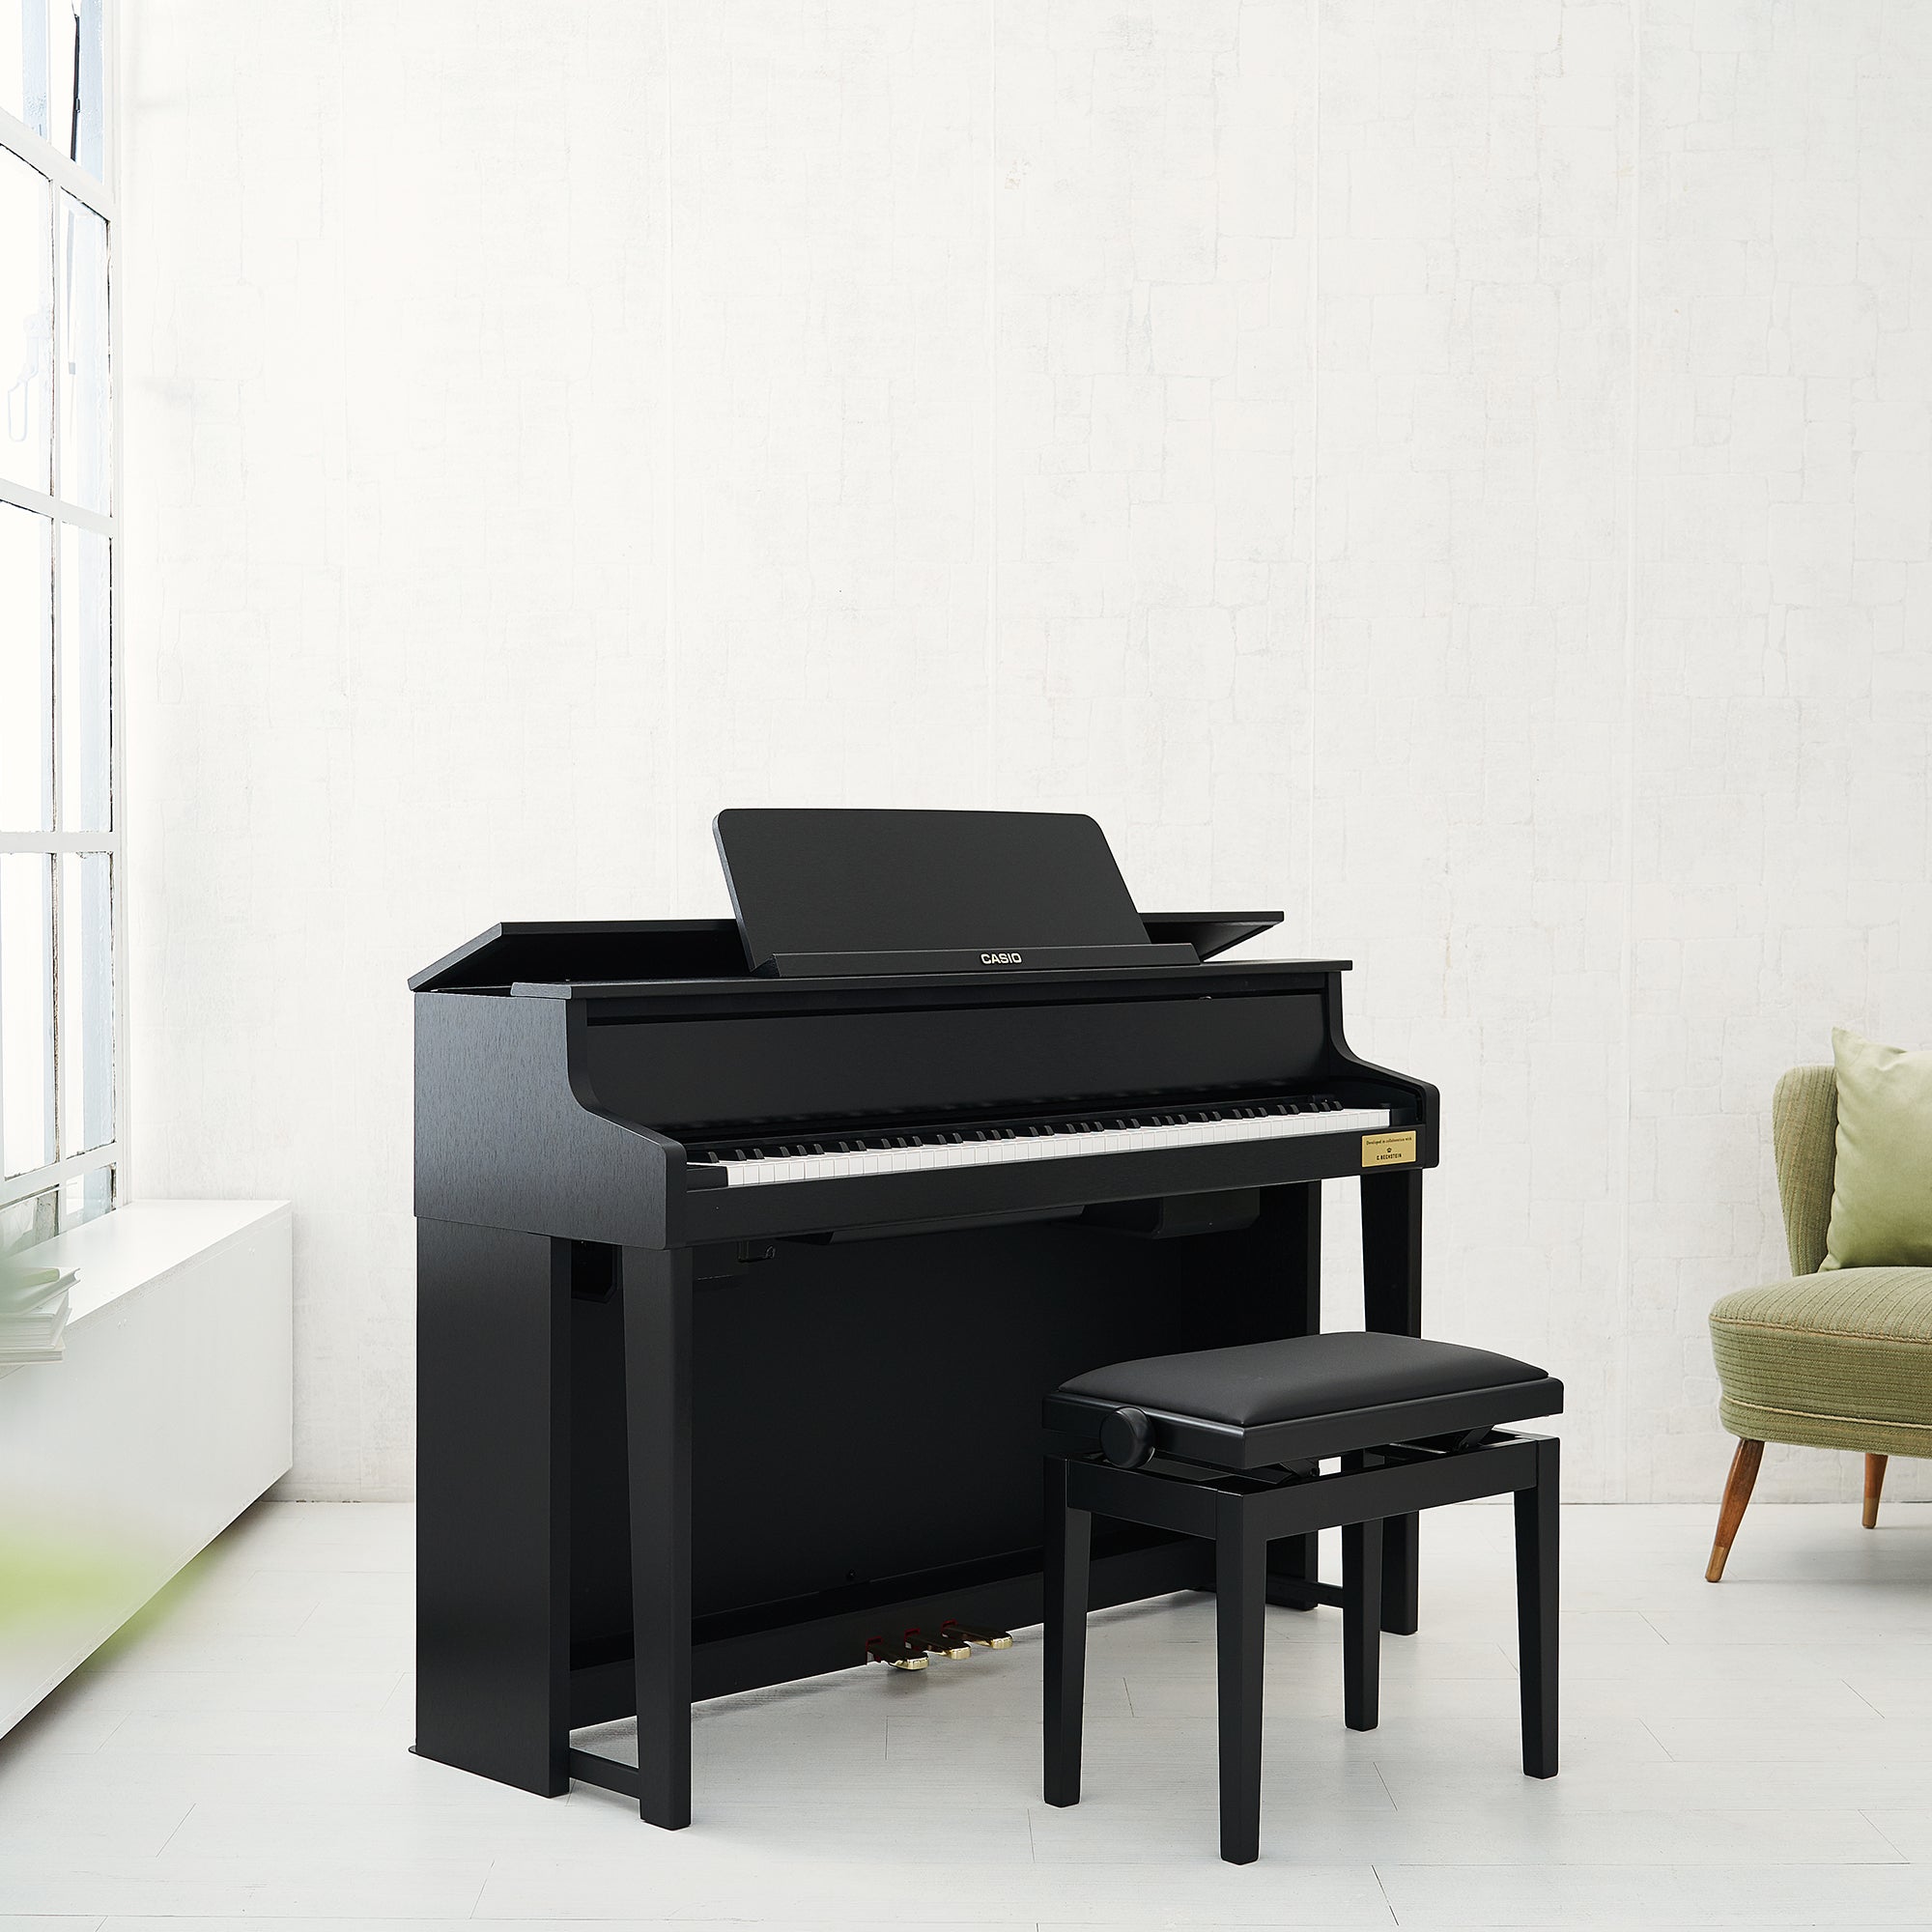 Casio Celviano Grand Hybrid GP-310 Digital Piano - Satin Black in a stylish living room